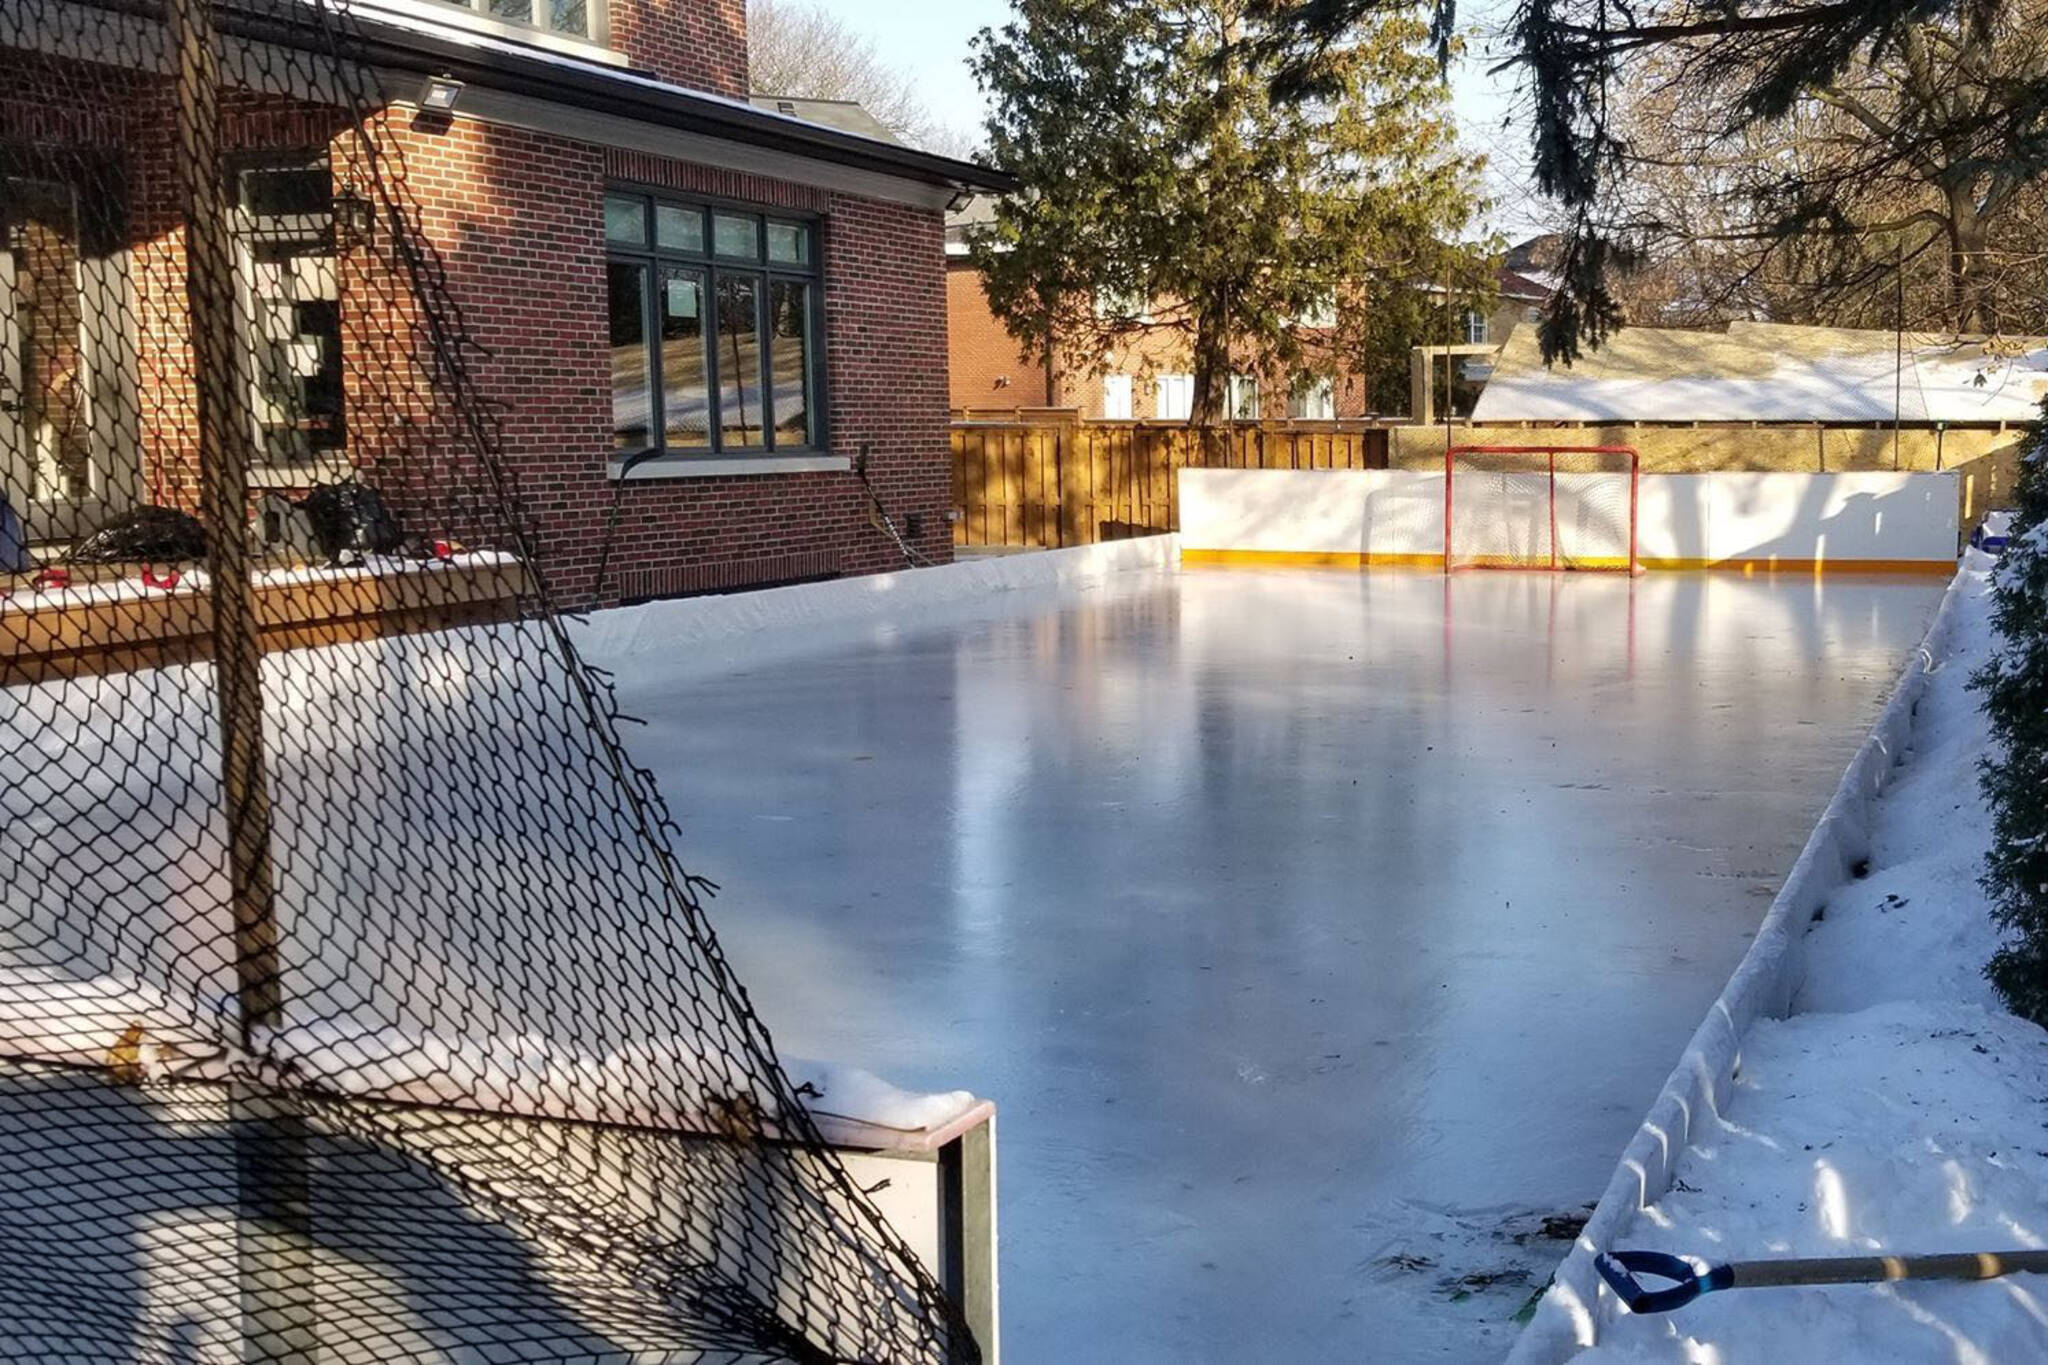 backyard hockey rink